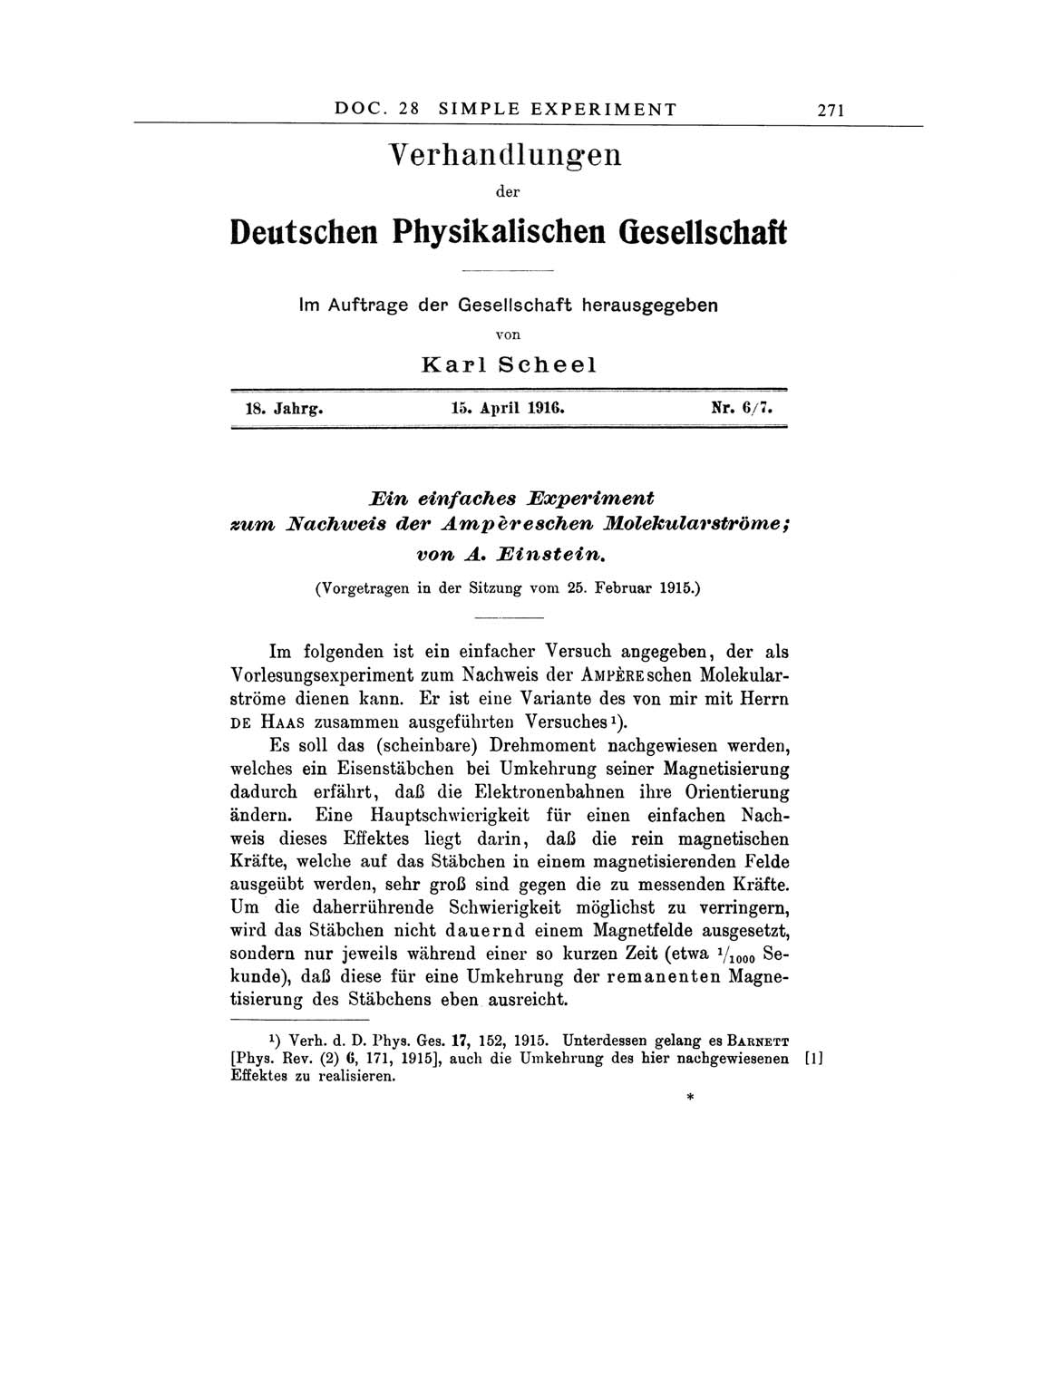 Volume 6: The Berlin Years: Writings, 1914-1917 page 271